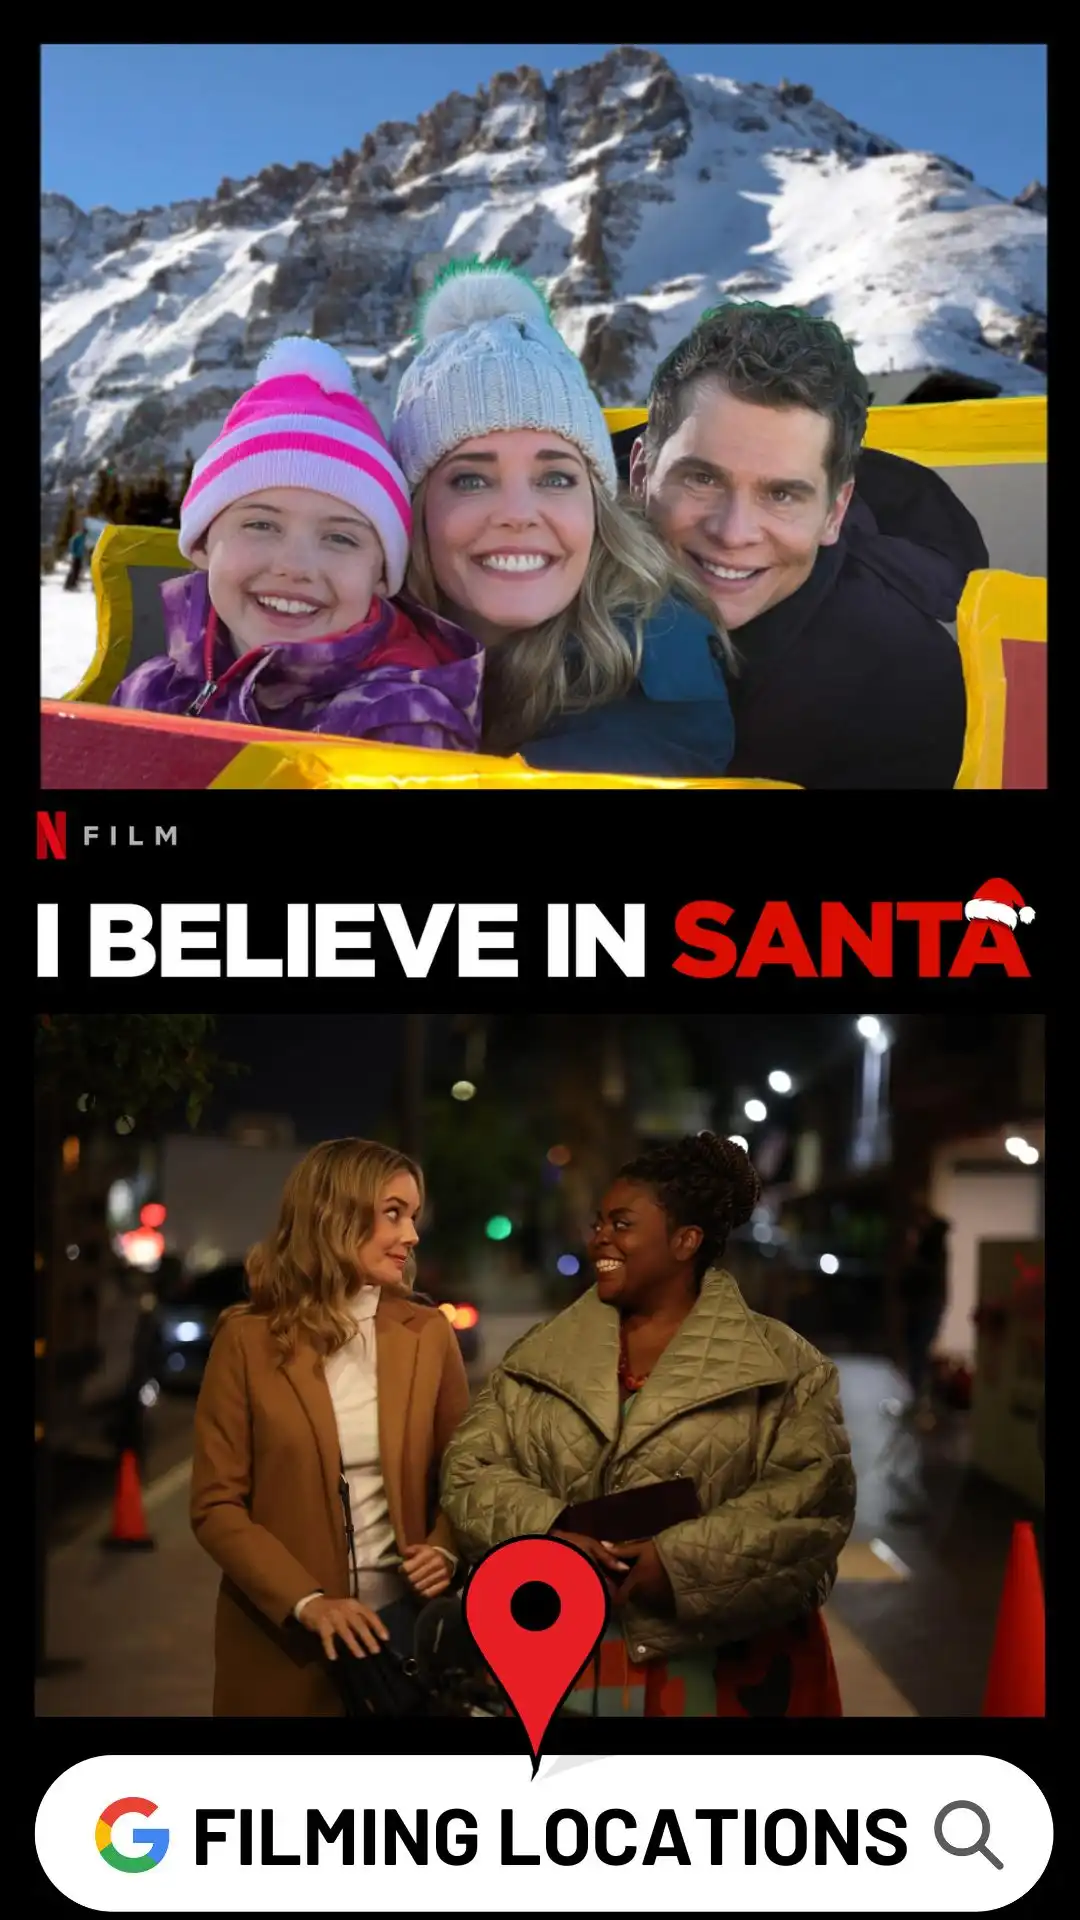 I Believe in Santa Filming Locations